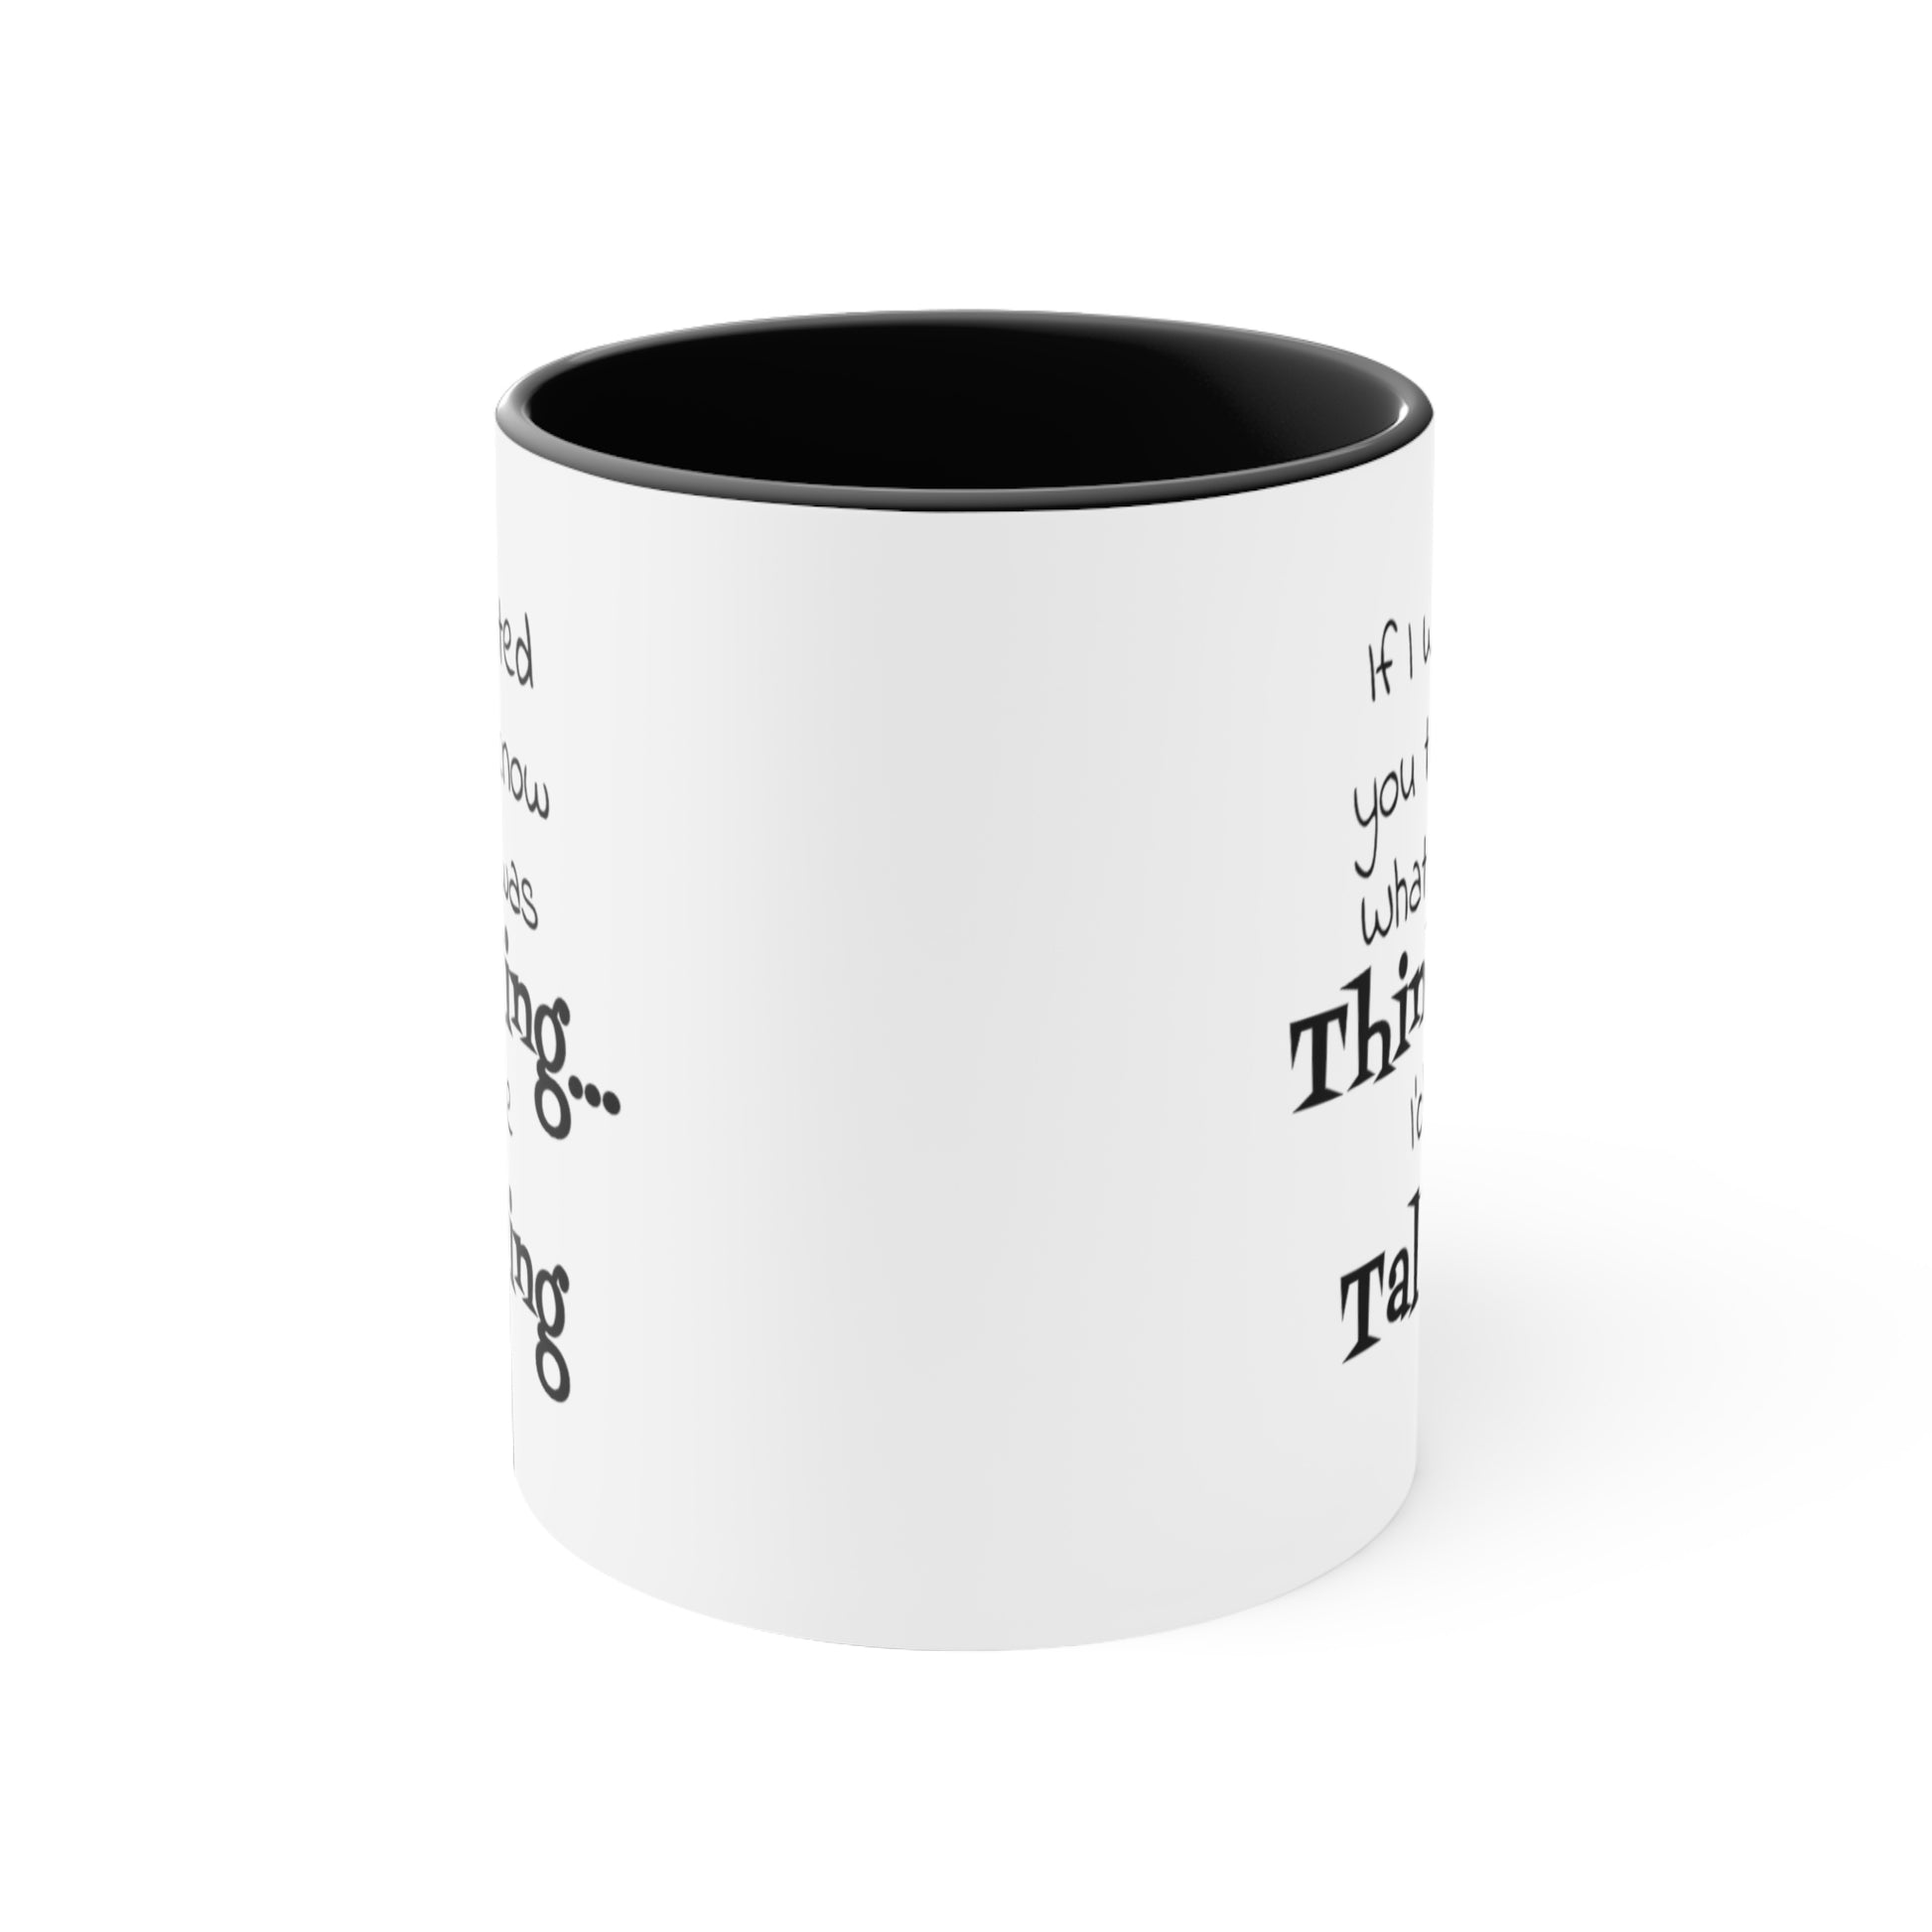 Al Bundy Coffee Mug - Double Sided Black Accent White Ceramic 11oz by TheGlassyLass.com